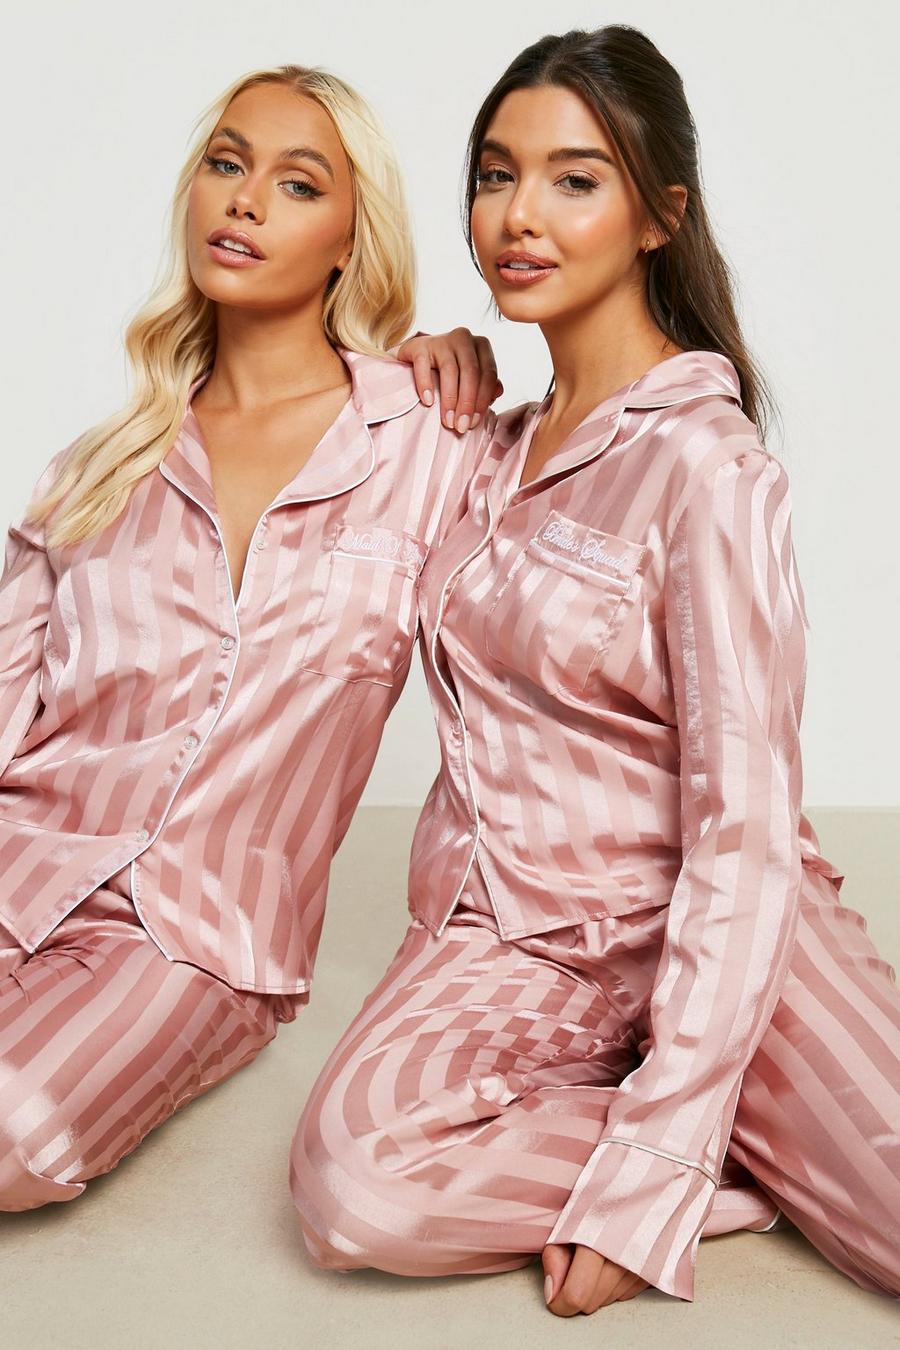 Pyjama satiné à rayures avec chemise et pantalon, Blush rose